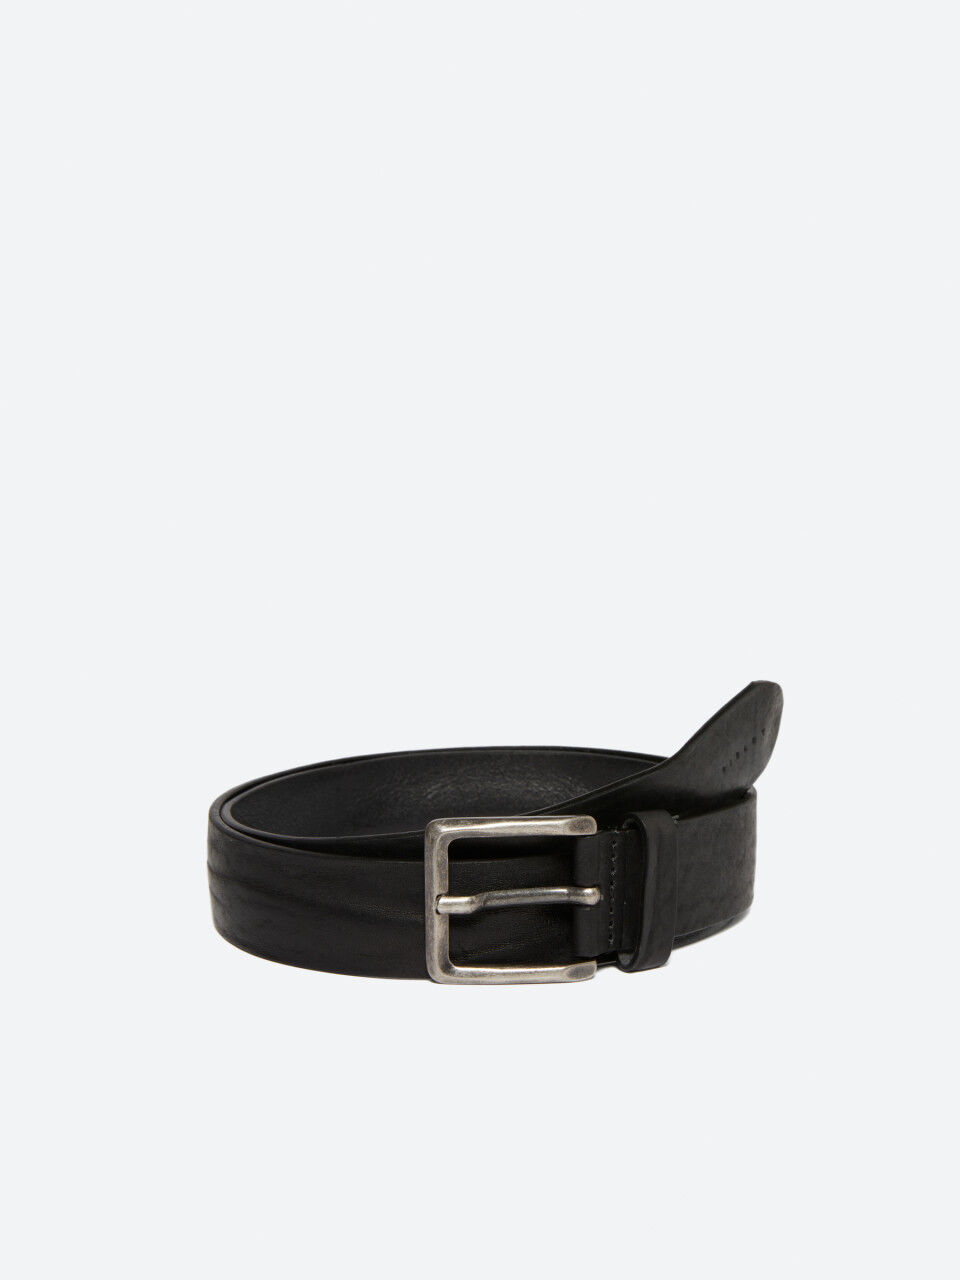 100% leather belt